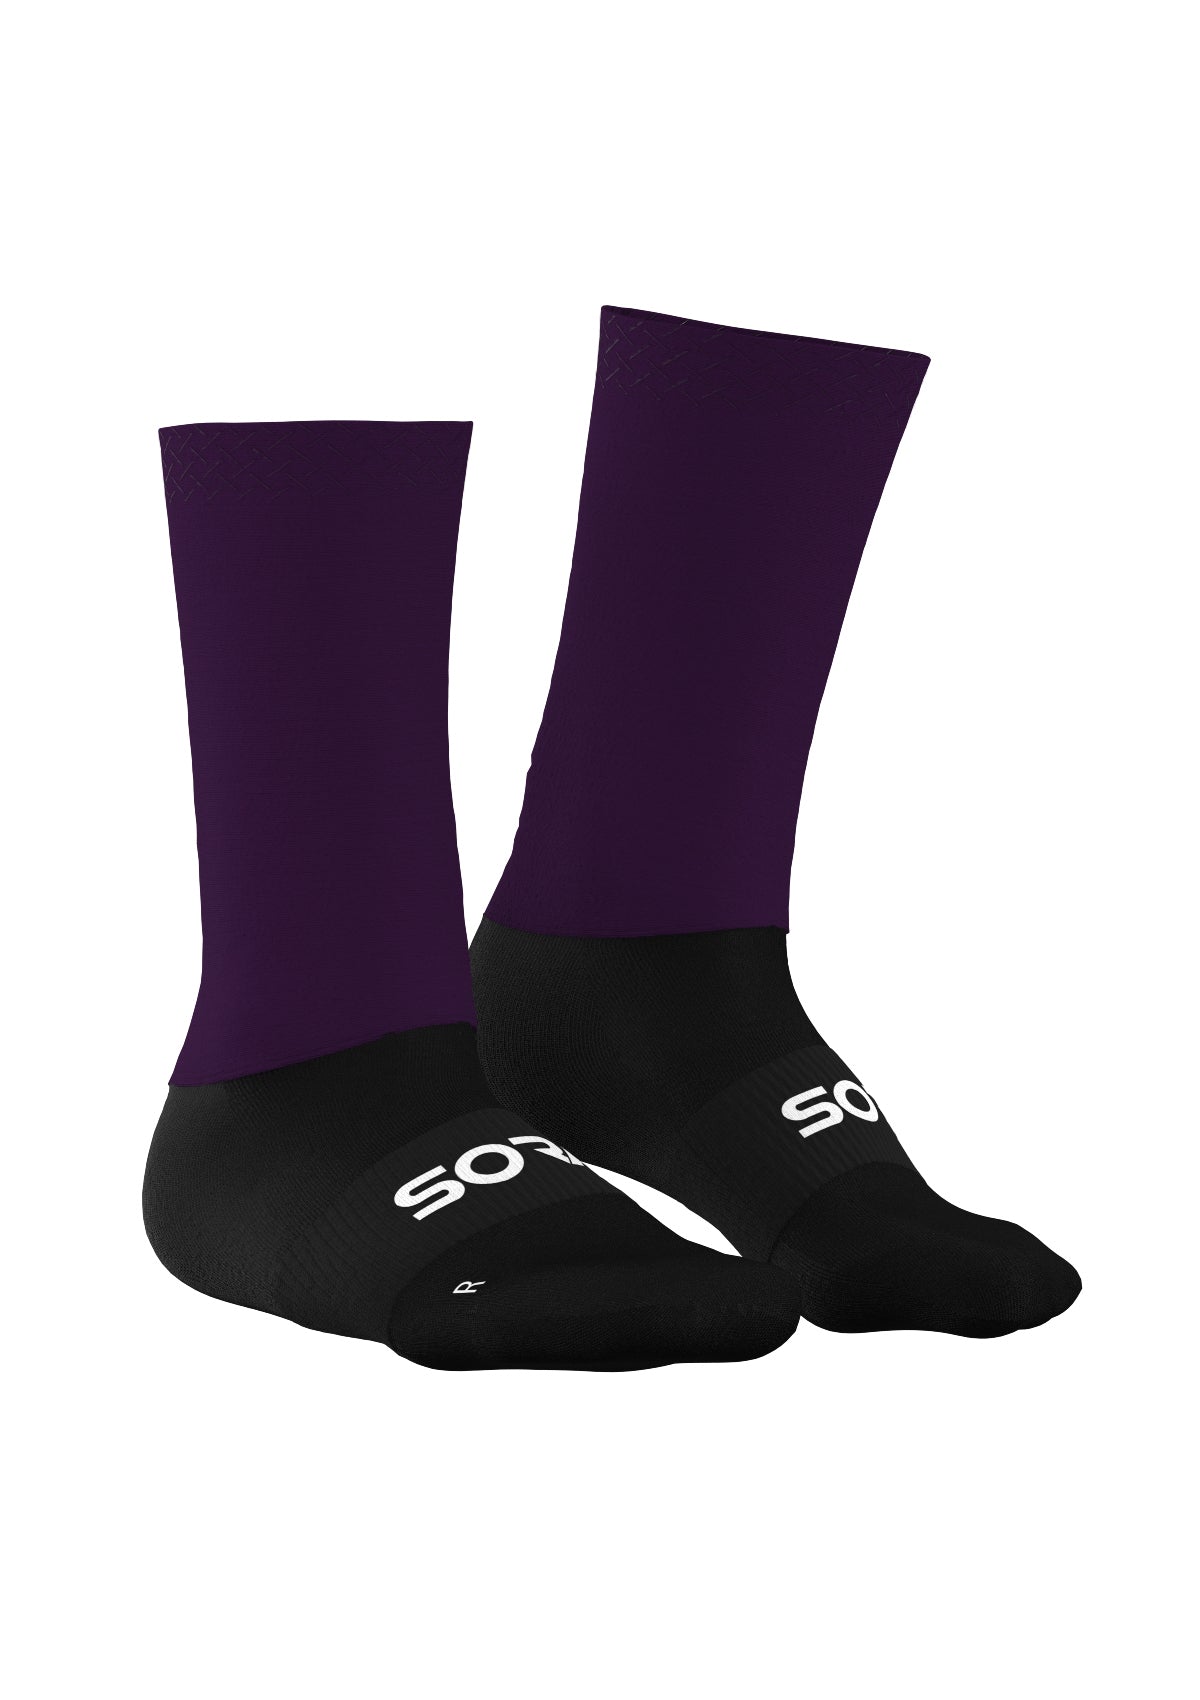 Aero Pro Light Black cycling socks